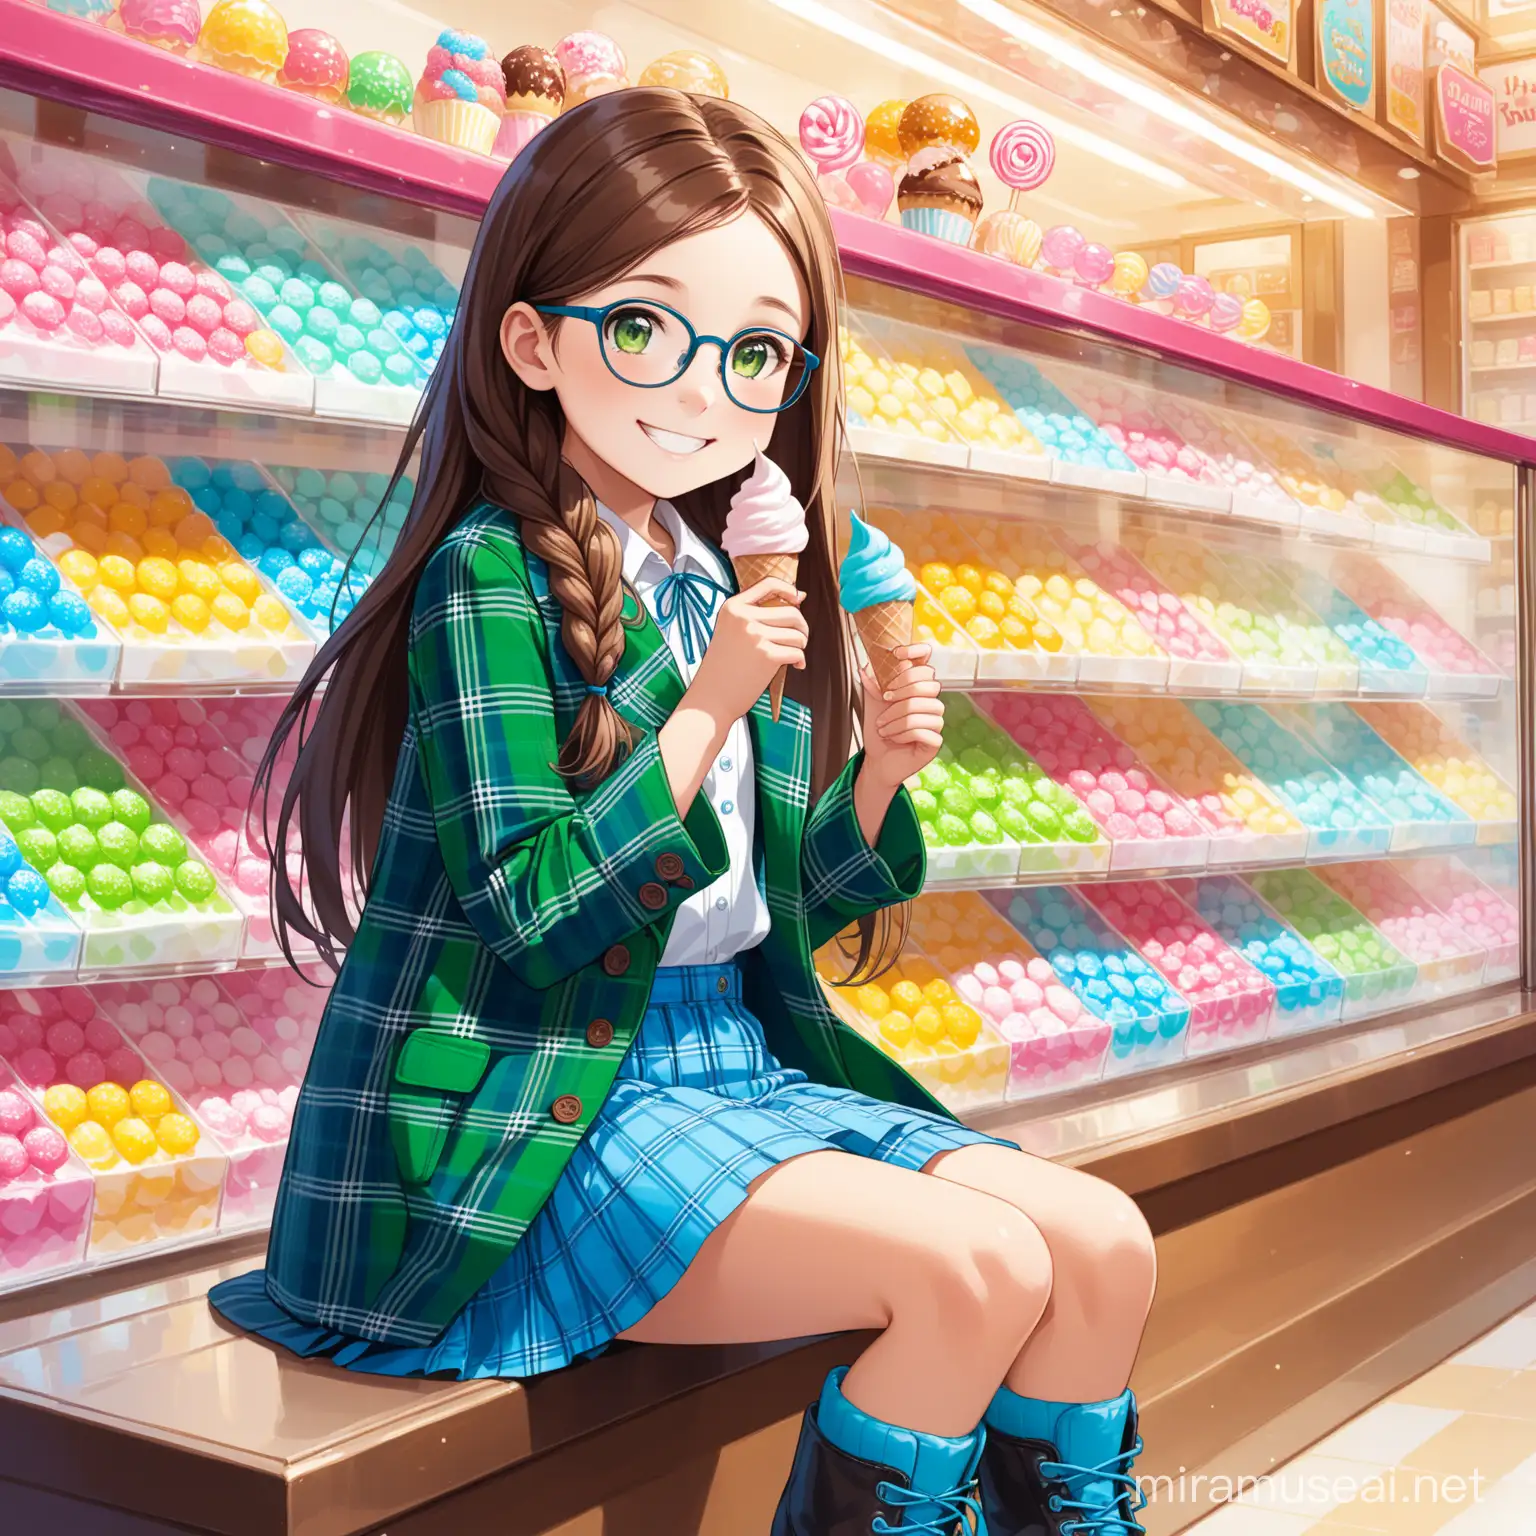 Joyful Girl in Green and Blue Tartan Coat Enjoying Candy and Ice Cream at Candy Shop